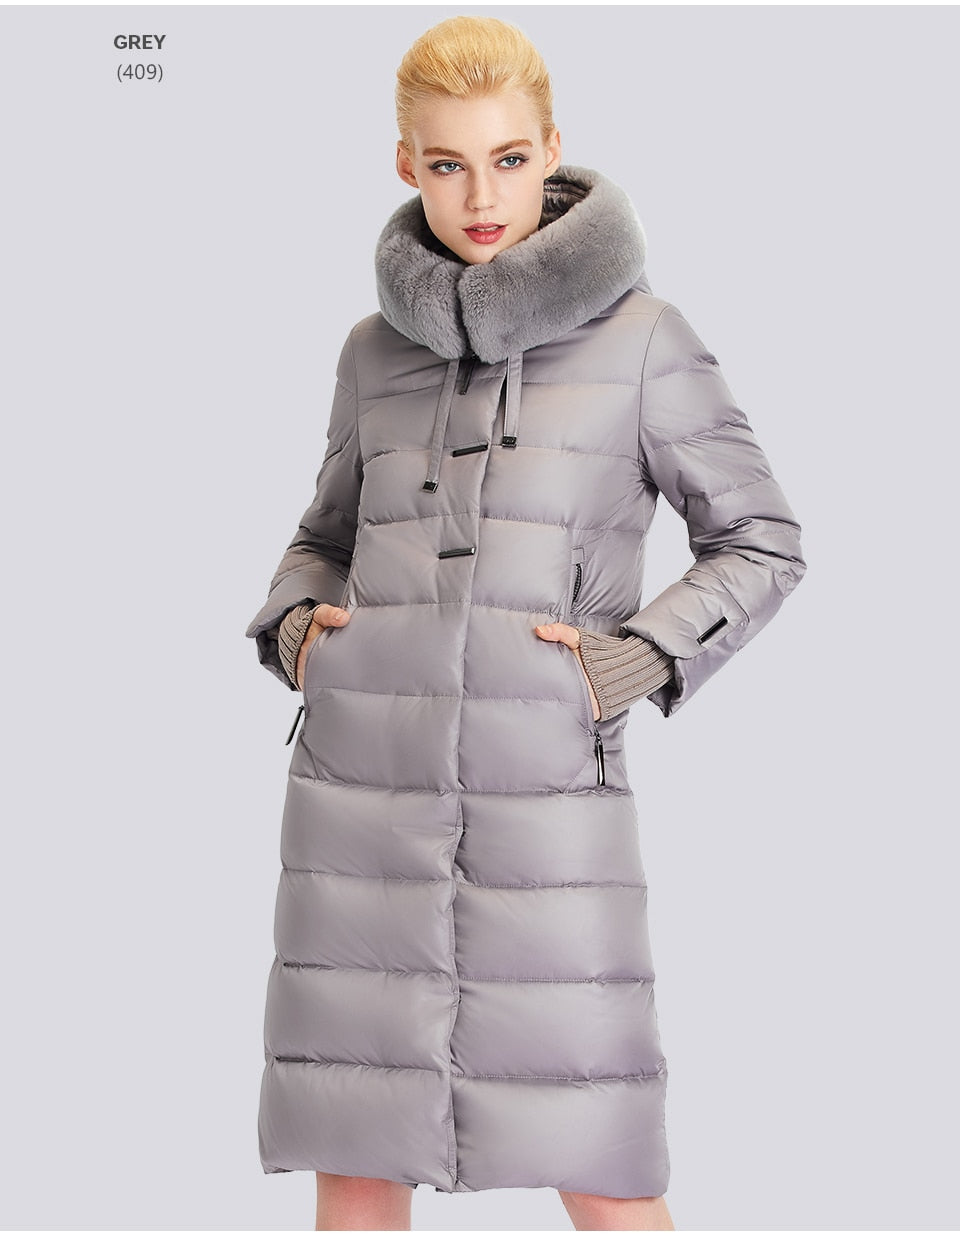 Women's Coat Jacket Medium Length